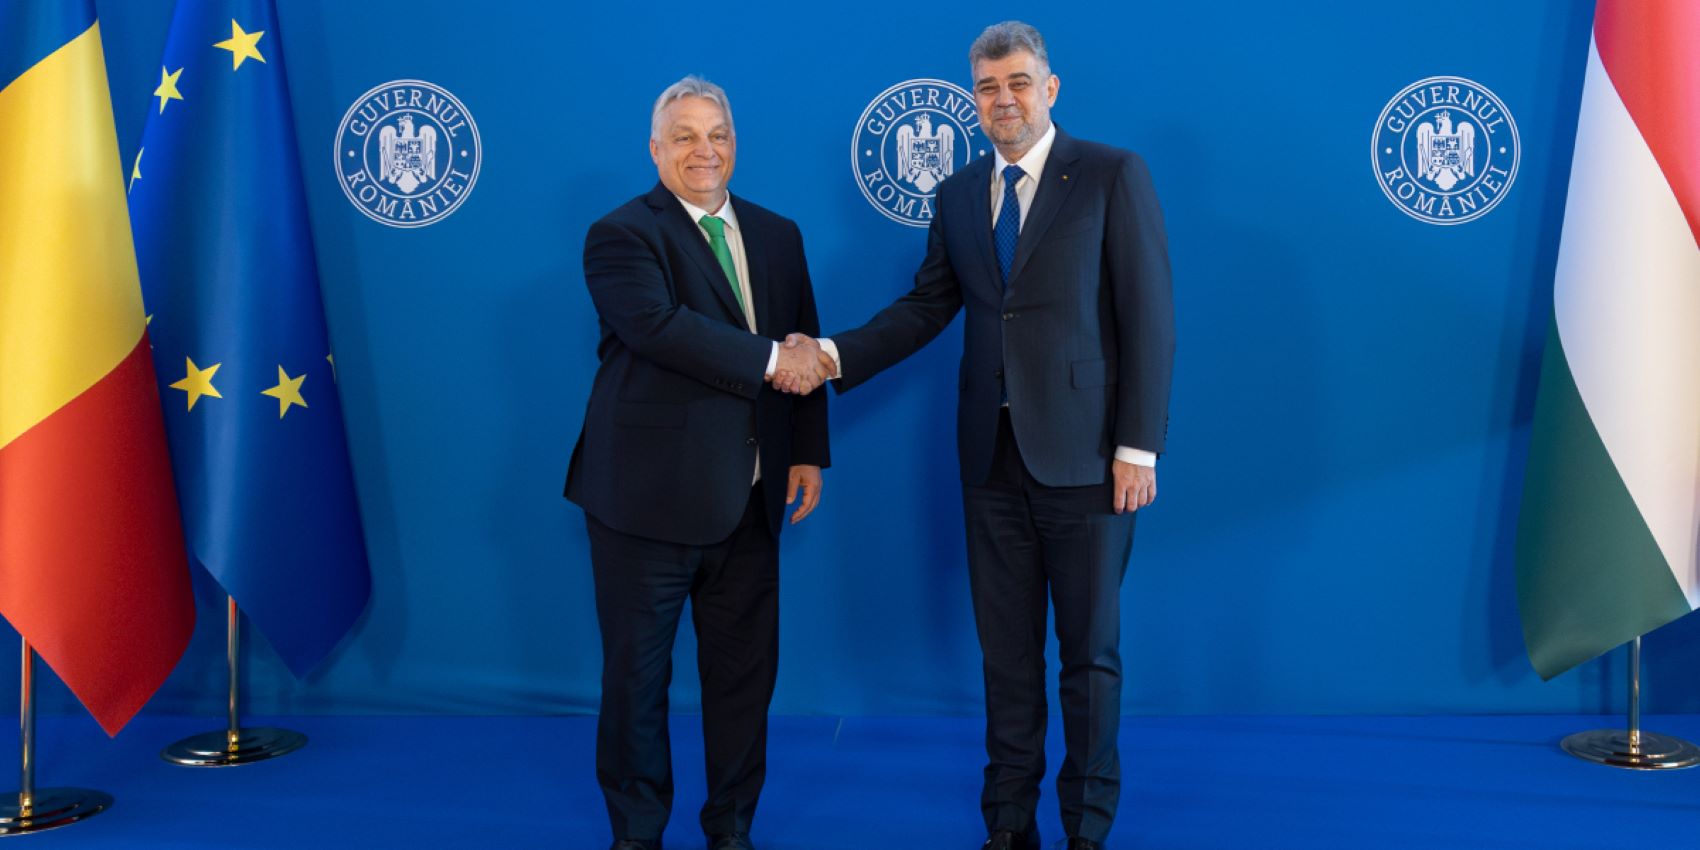 Romanian PM Ciolacu to Meet Viktor Orban Friday to Discuss Schengen, sources